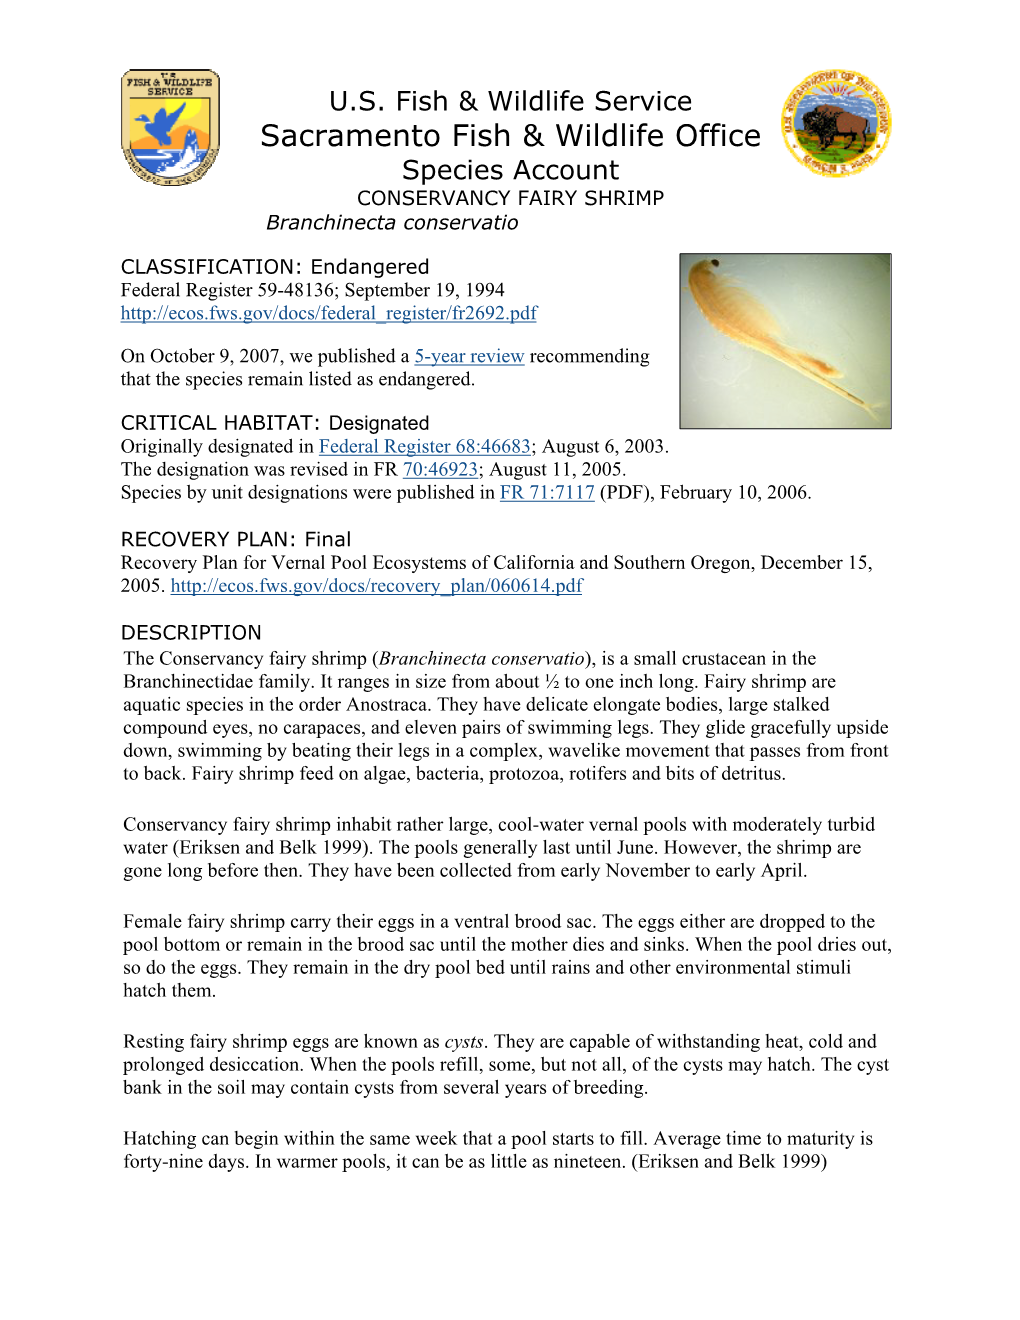 Species Account CONSERVANCY FAIRY SHRIMP Branchinecta Conservatio